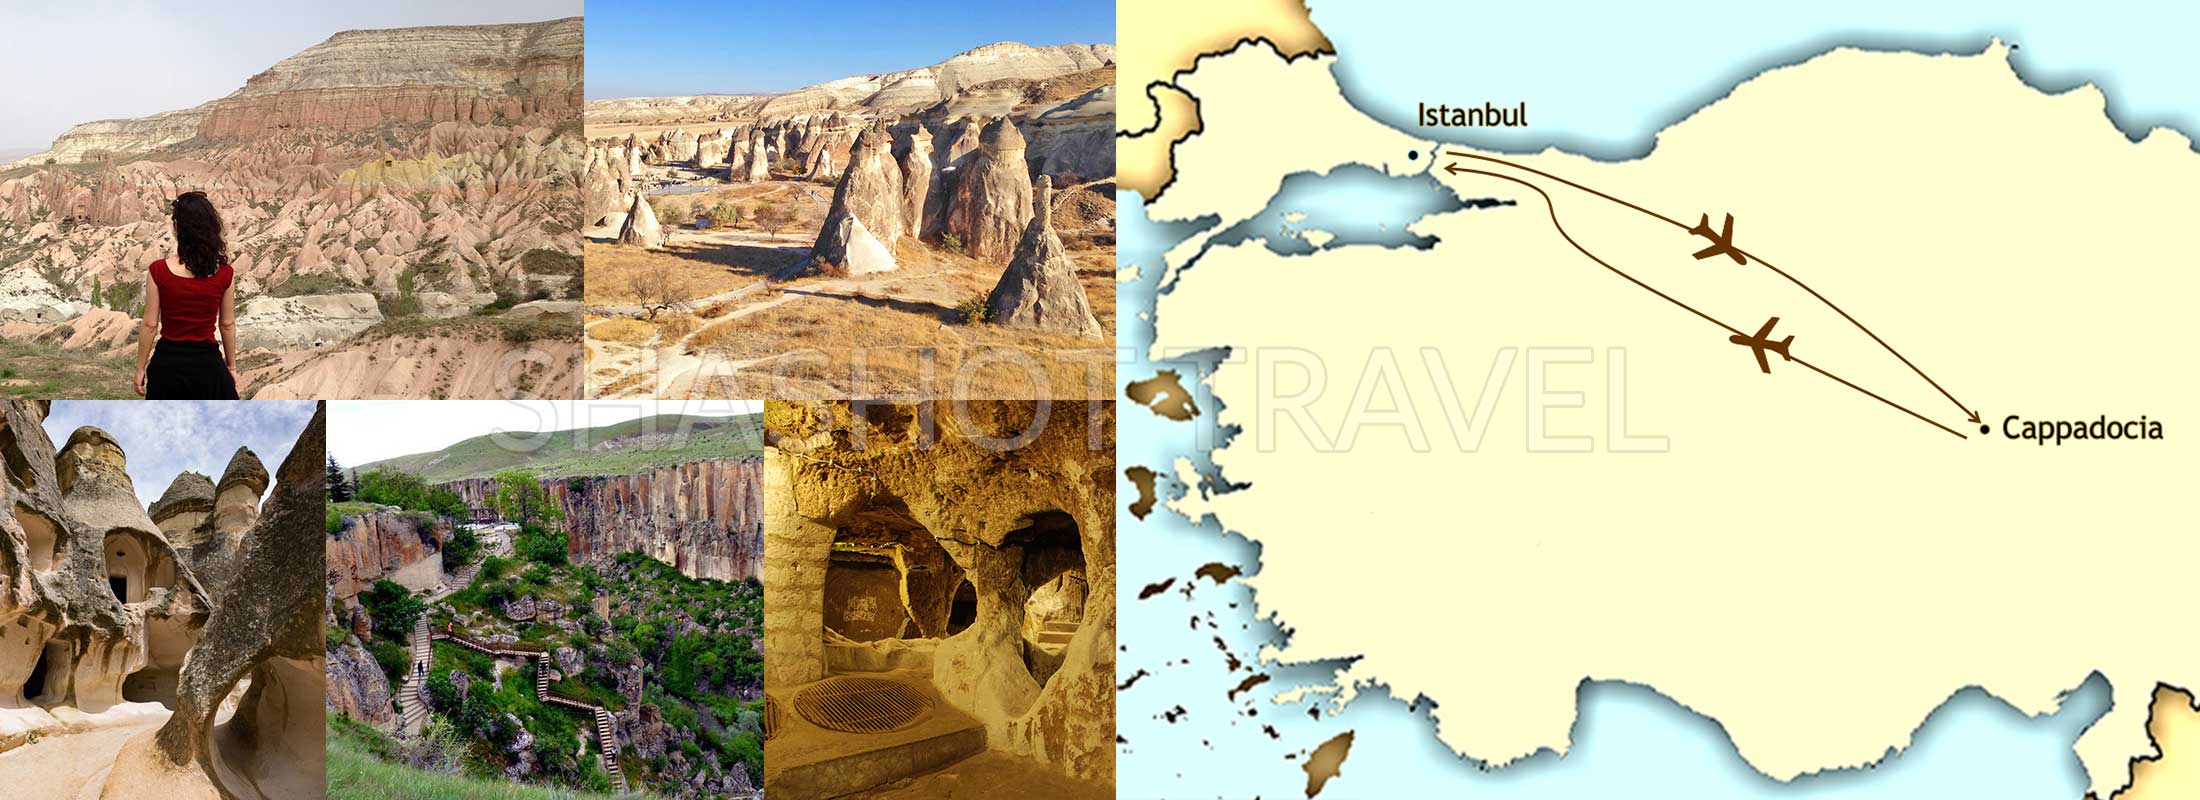 3-days-cappadocia-tour-by-flight-shashot-travel-turkey